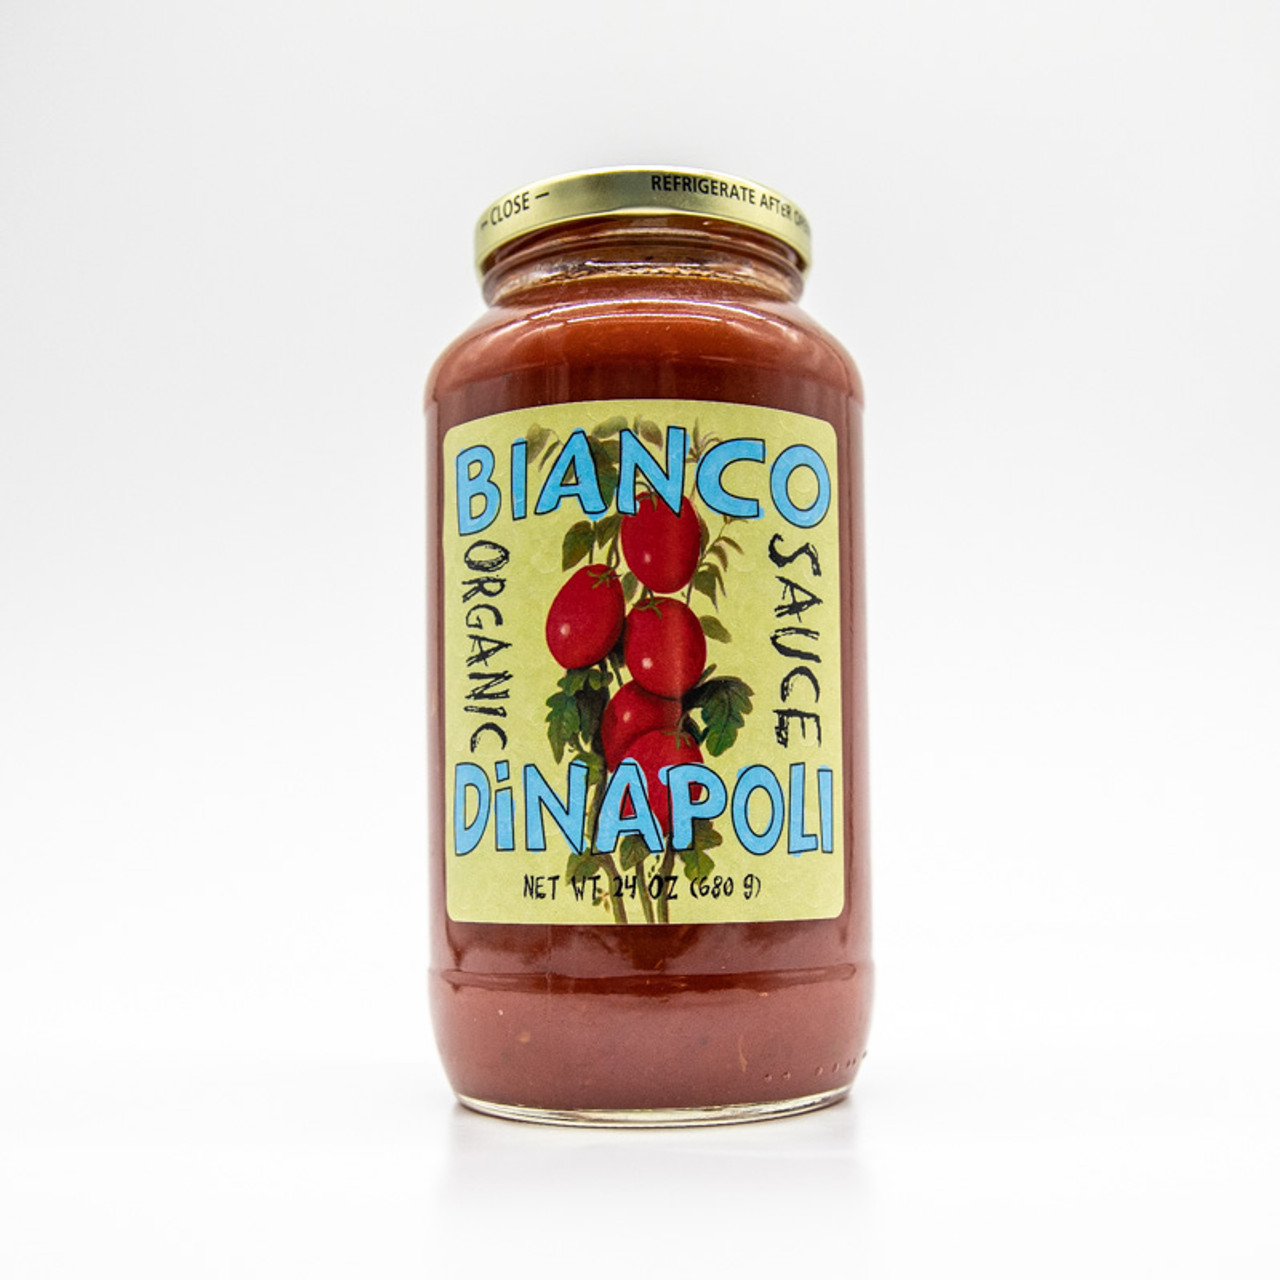 Messing excentrisk bekræft venligst Bianco DiNapoli Marinara Sauce | Pasta Sauces | Di Bruno Bros.